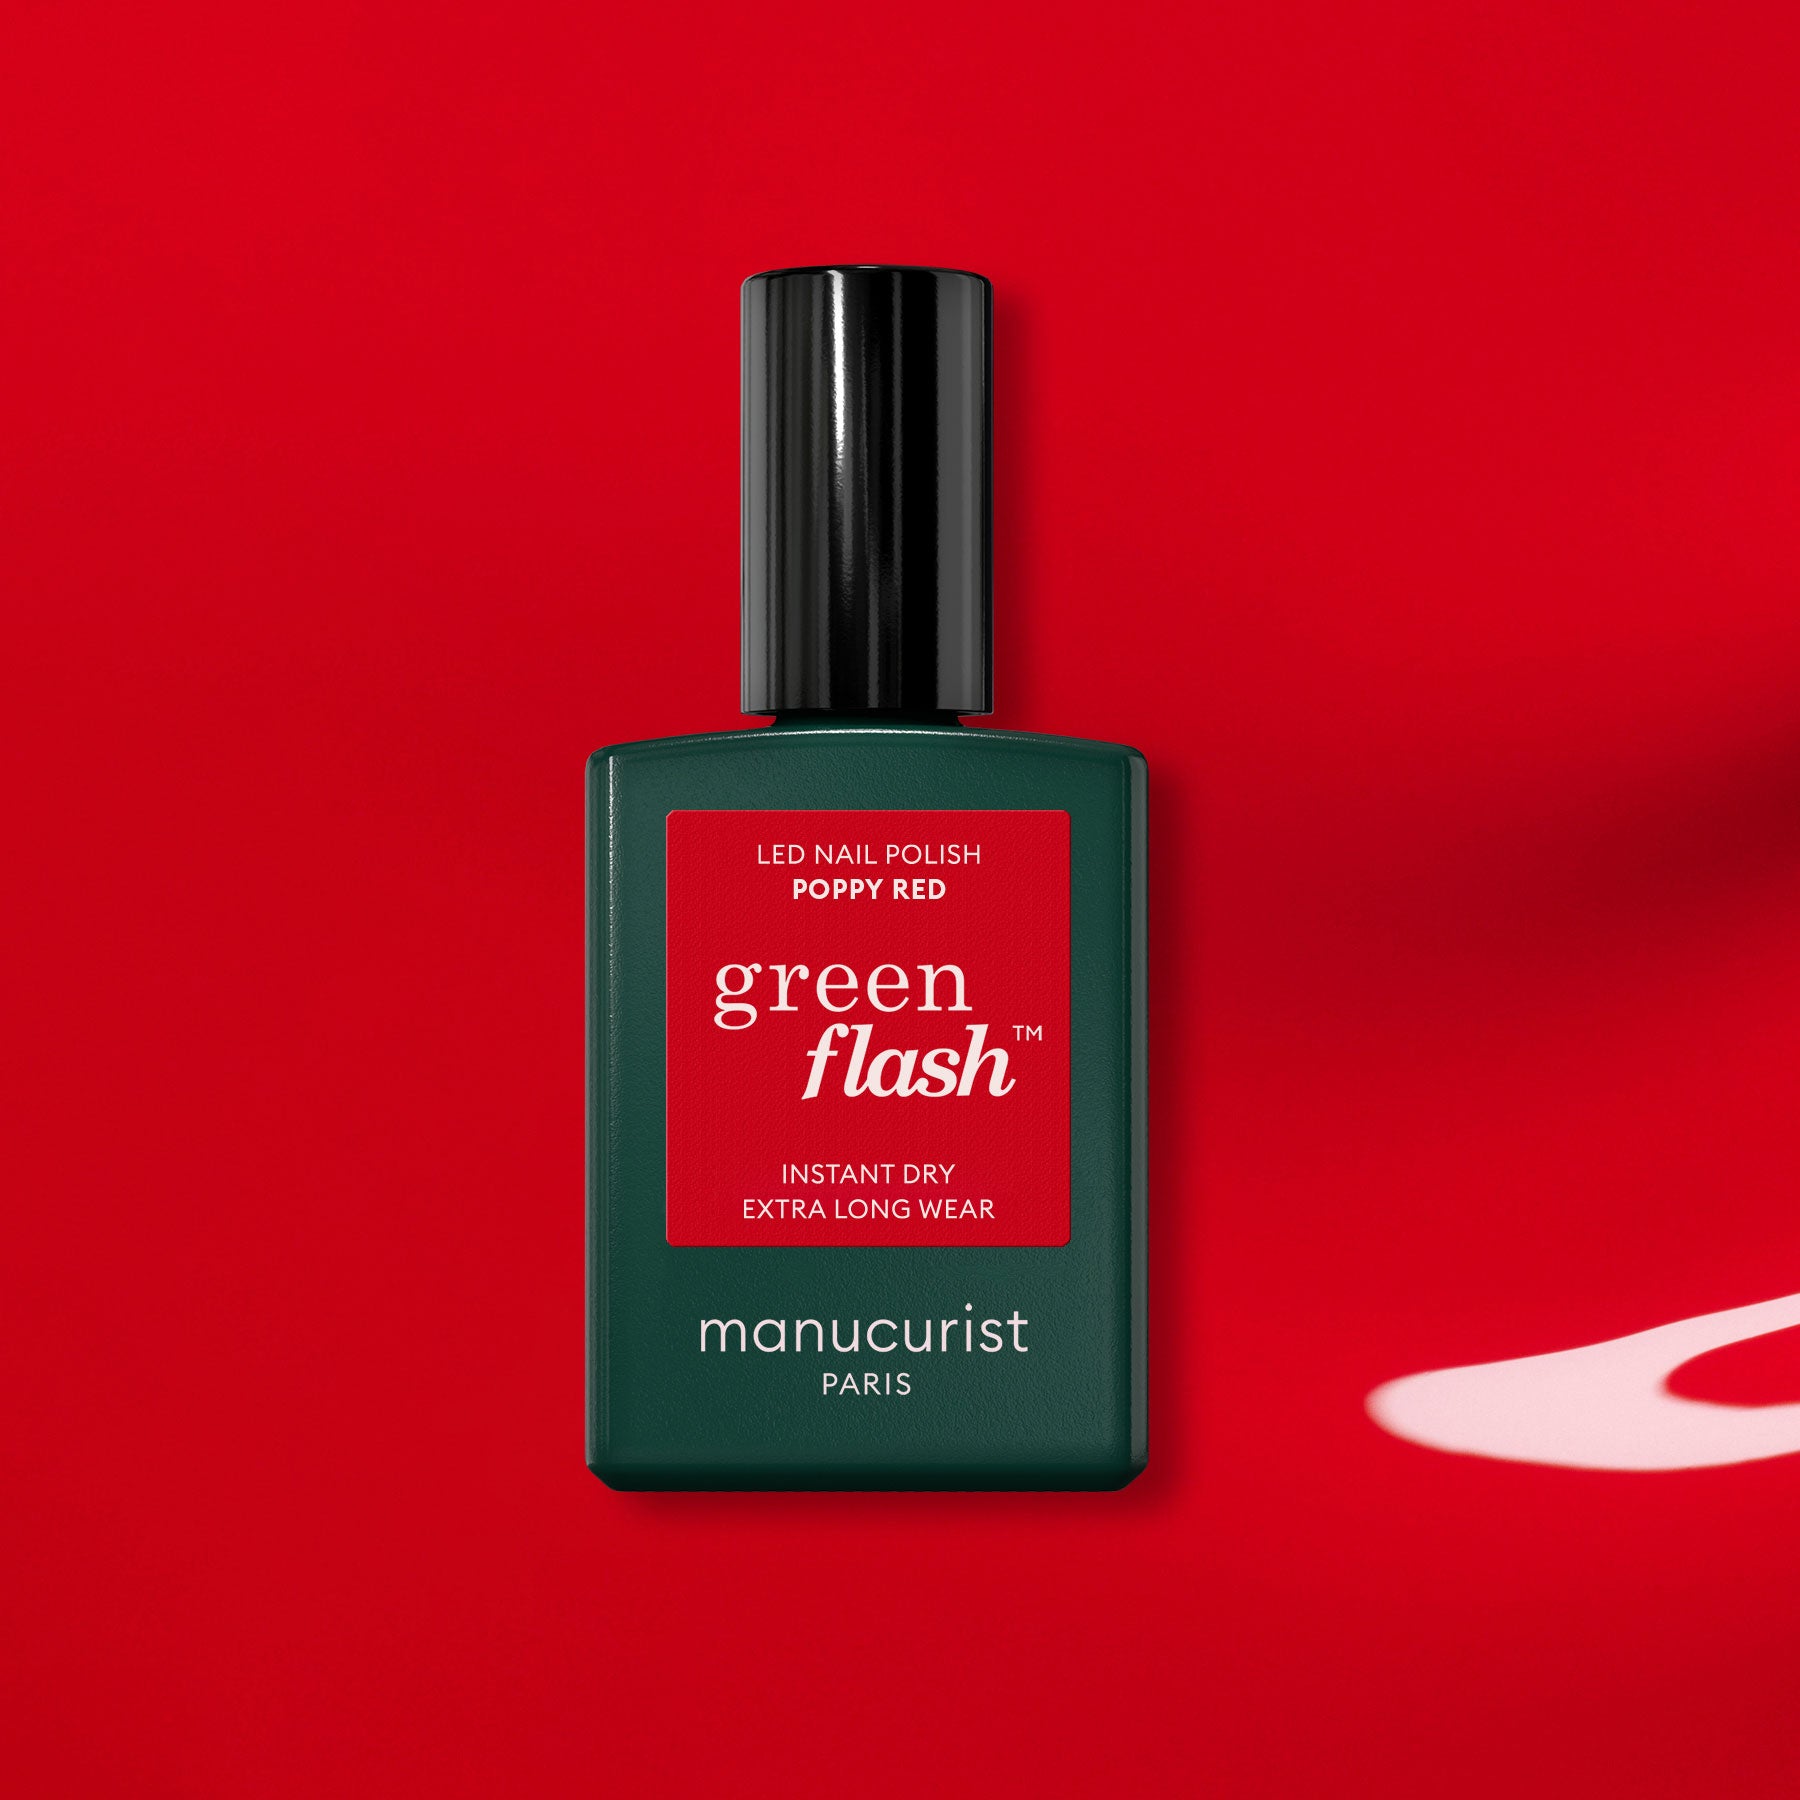 Manucurist Green Flash LED Gel Nail Polish - Poppy Red - 12-Free,  Bio-Sourced (84%) Nail Polish - Made in France - 0.5 fl oz